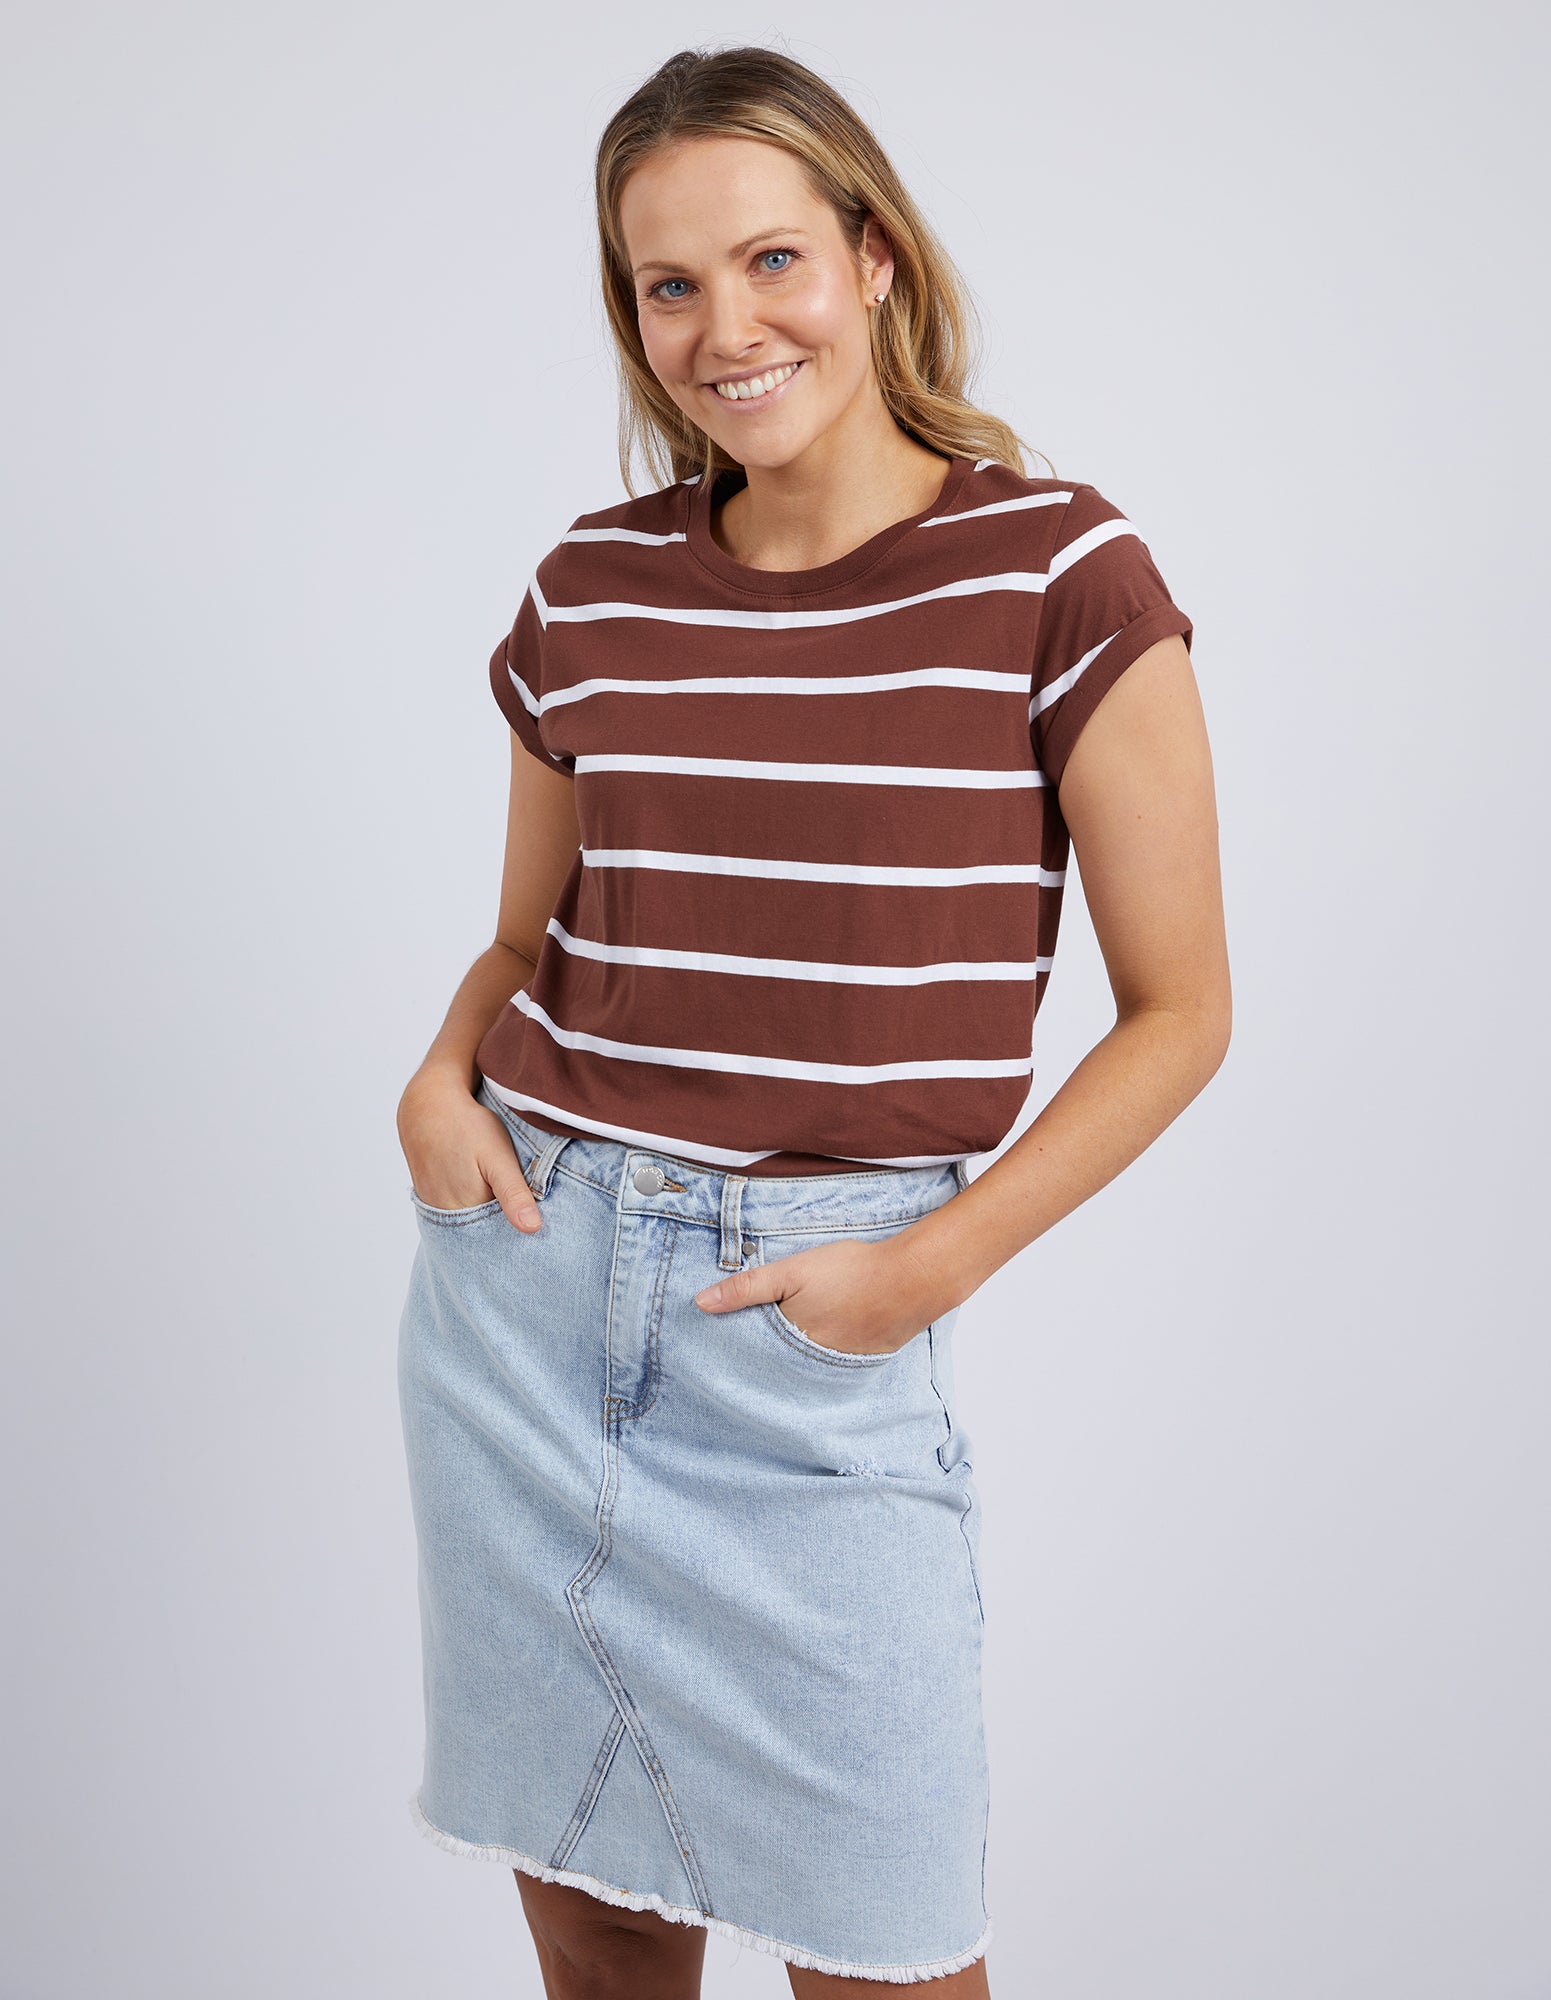 Manly Stripe Tee Choc/white Stripe | Buy Online | Foxwood Clothing